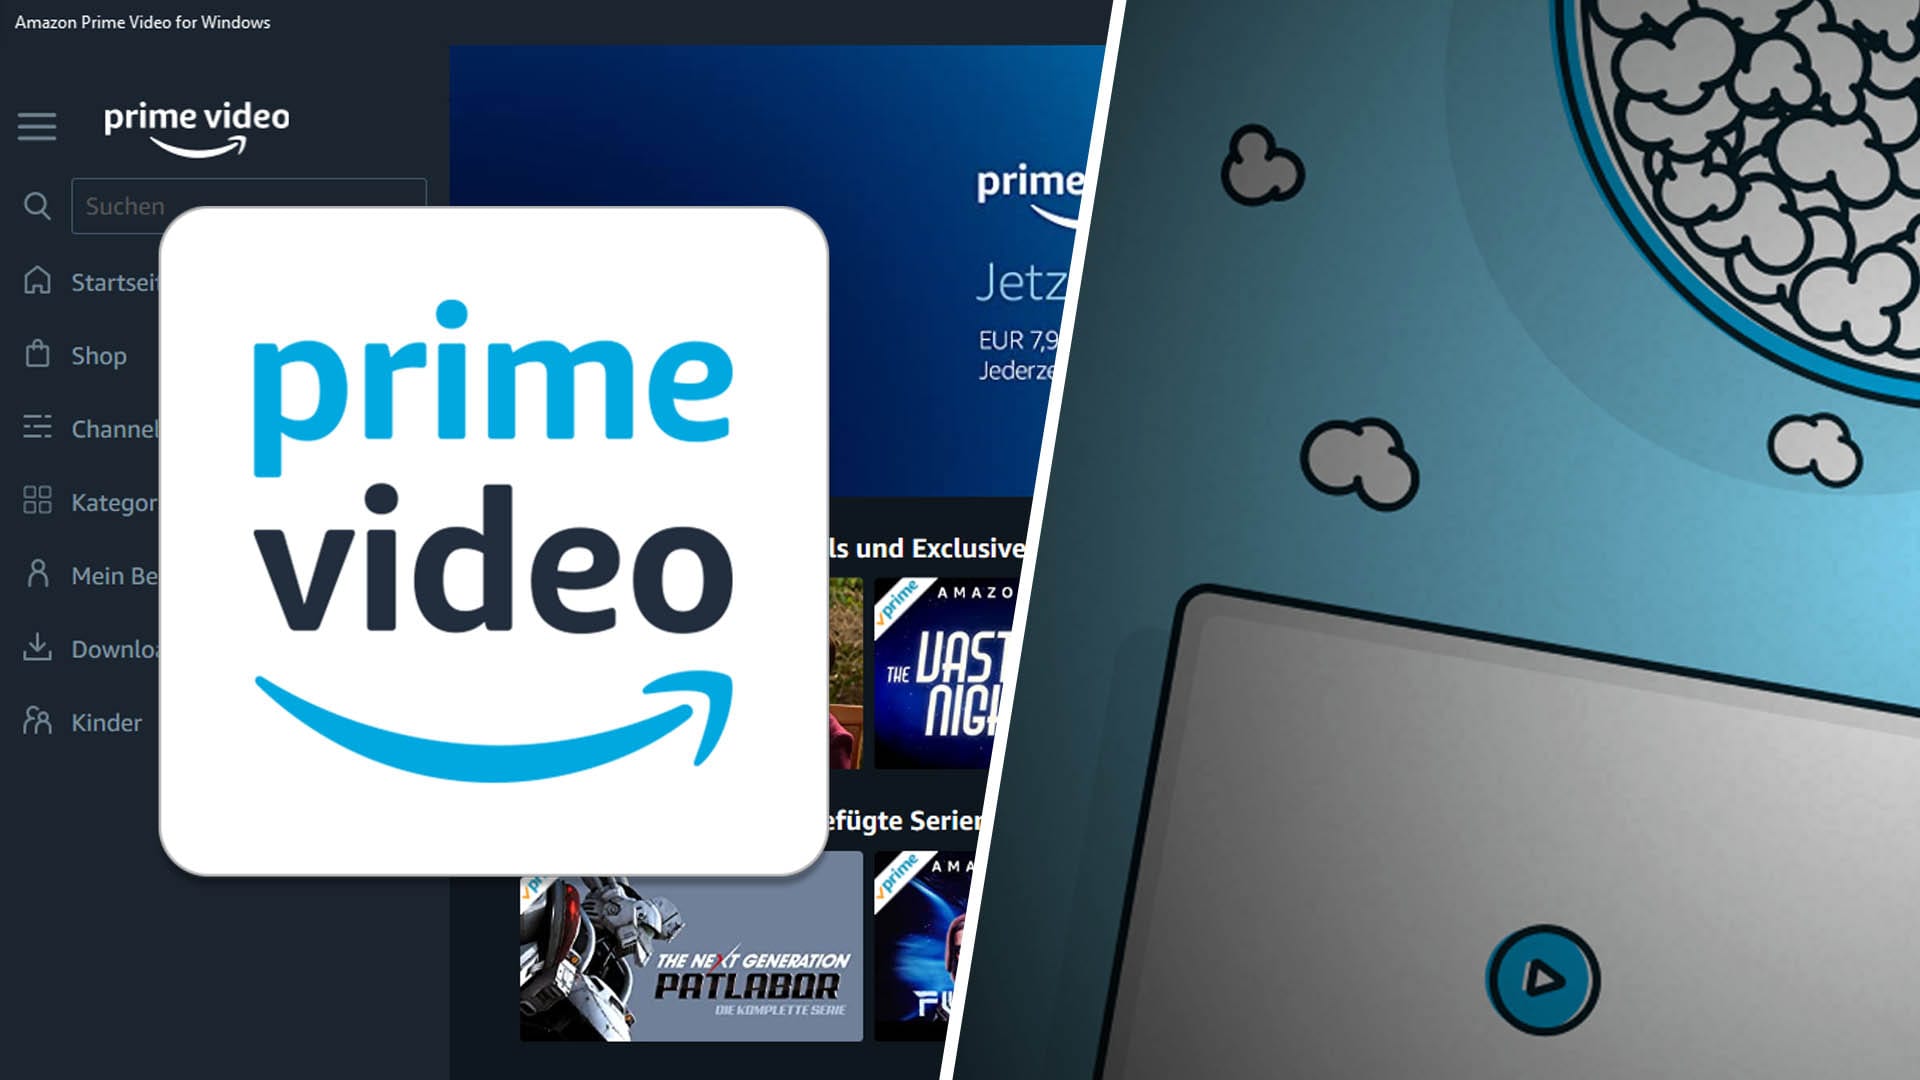 amazon prime video app for windows 10 pc free download